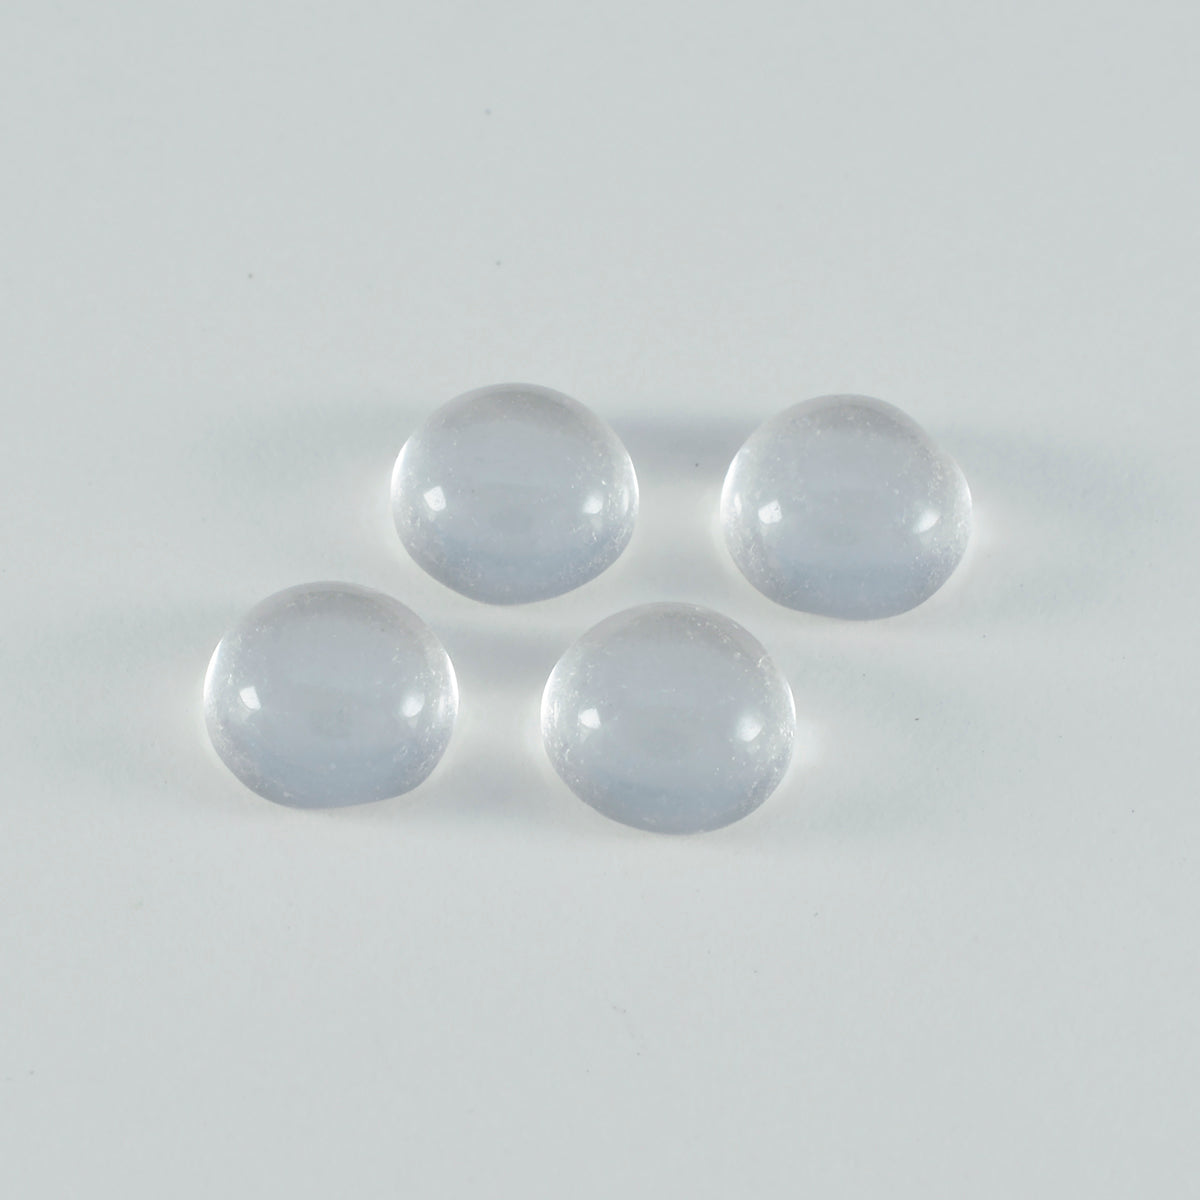 Riyogems 1PC witte kristalkwarts cabochon 6x6 mm ronde vorm A+ kwaliteit losse edelsteen